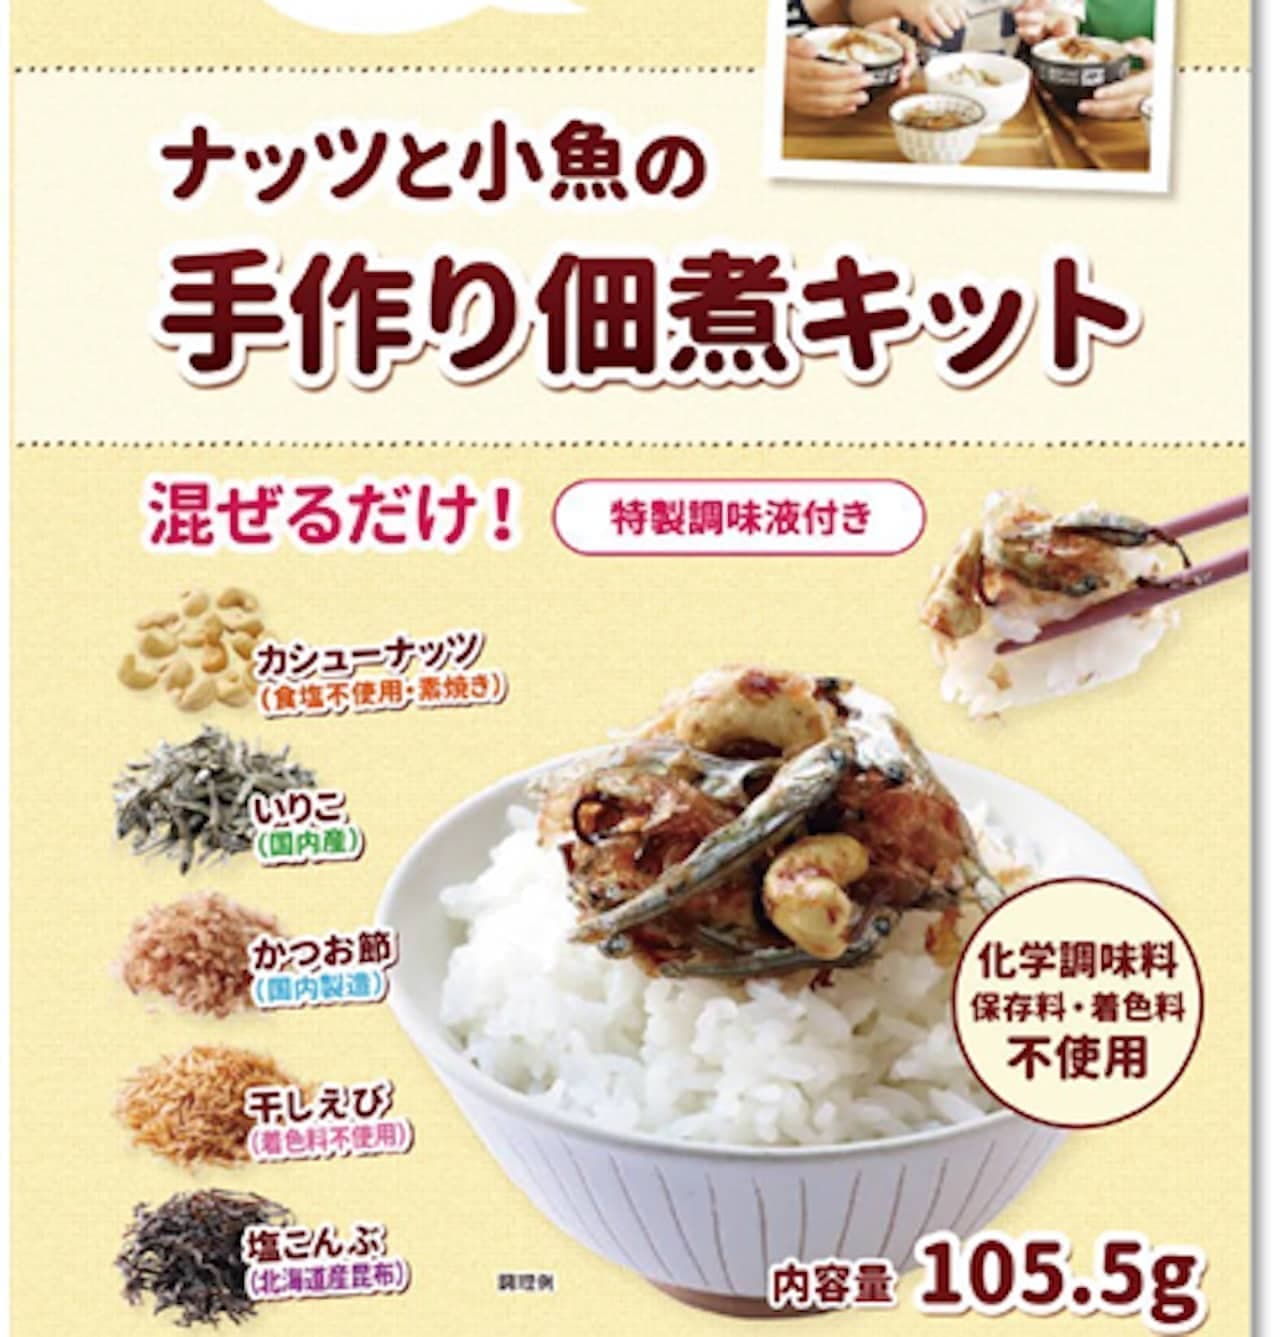 "Let's make together! Handmade tsukudani kit of nuts and small fish" from Marutomo